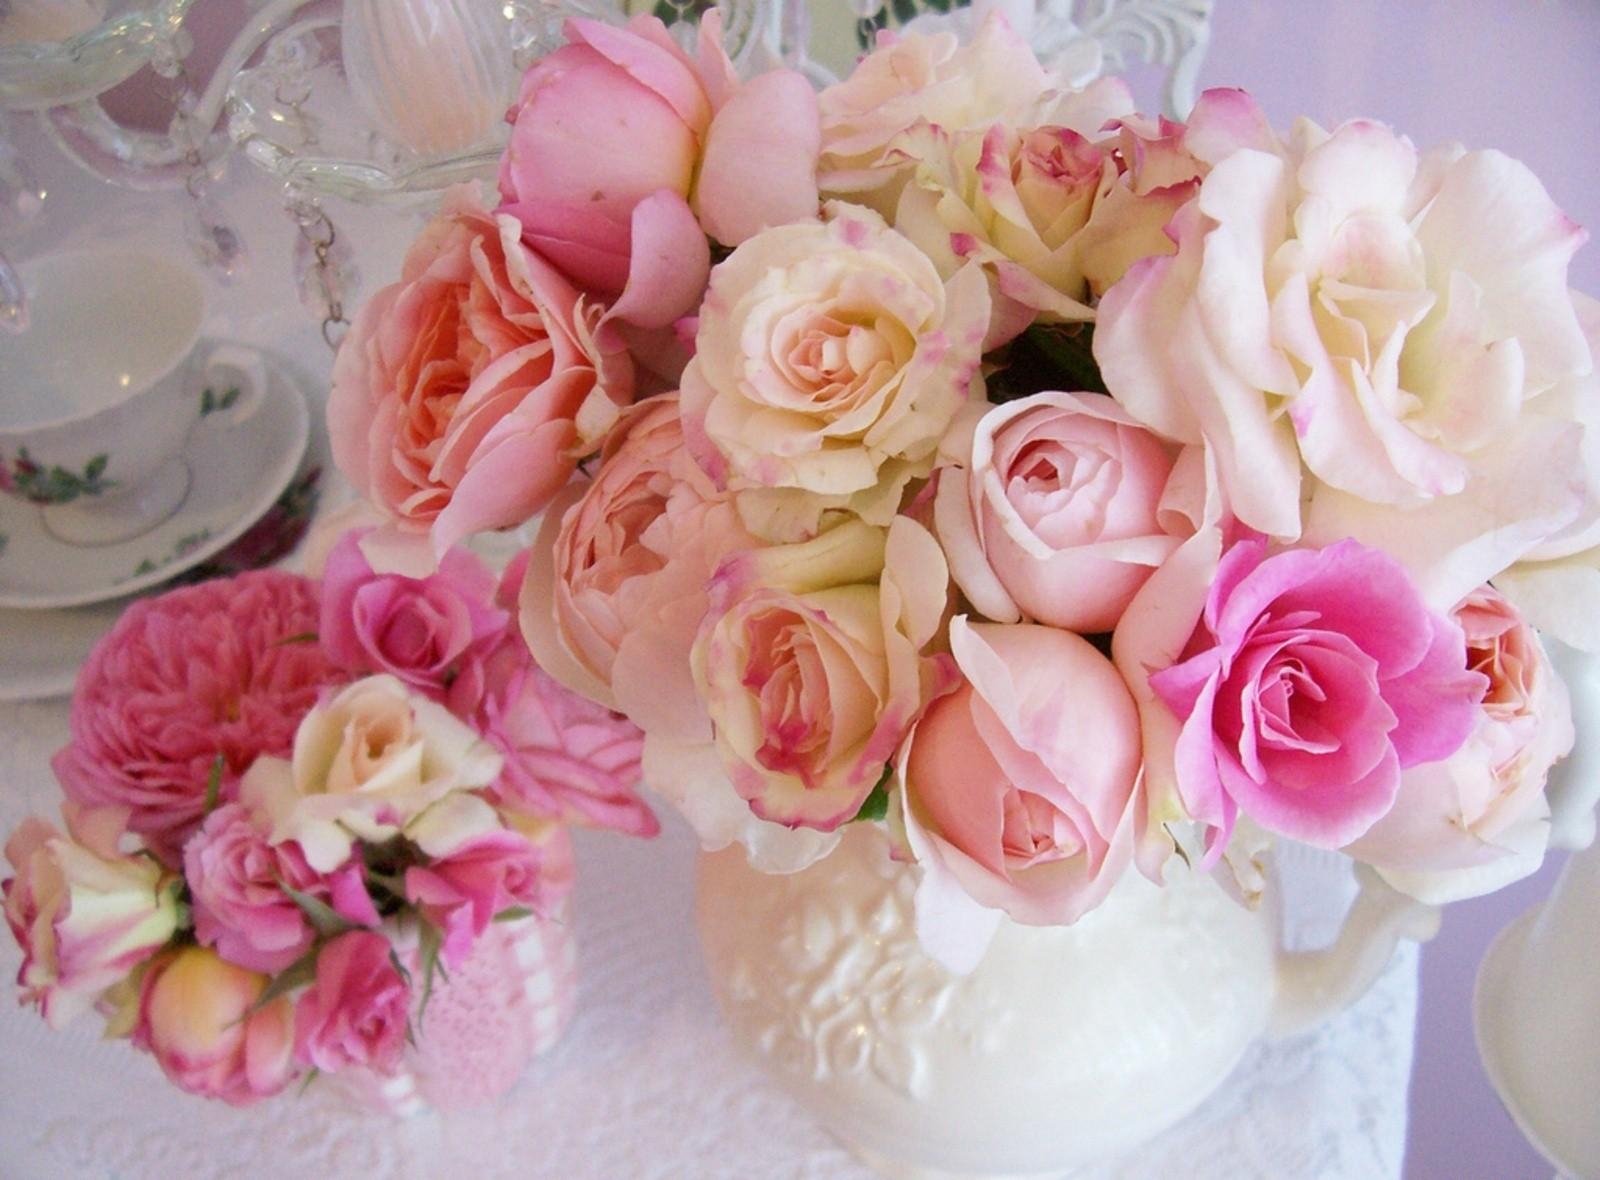 flowers, roses, bouquet, table, vase, serving